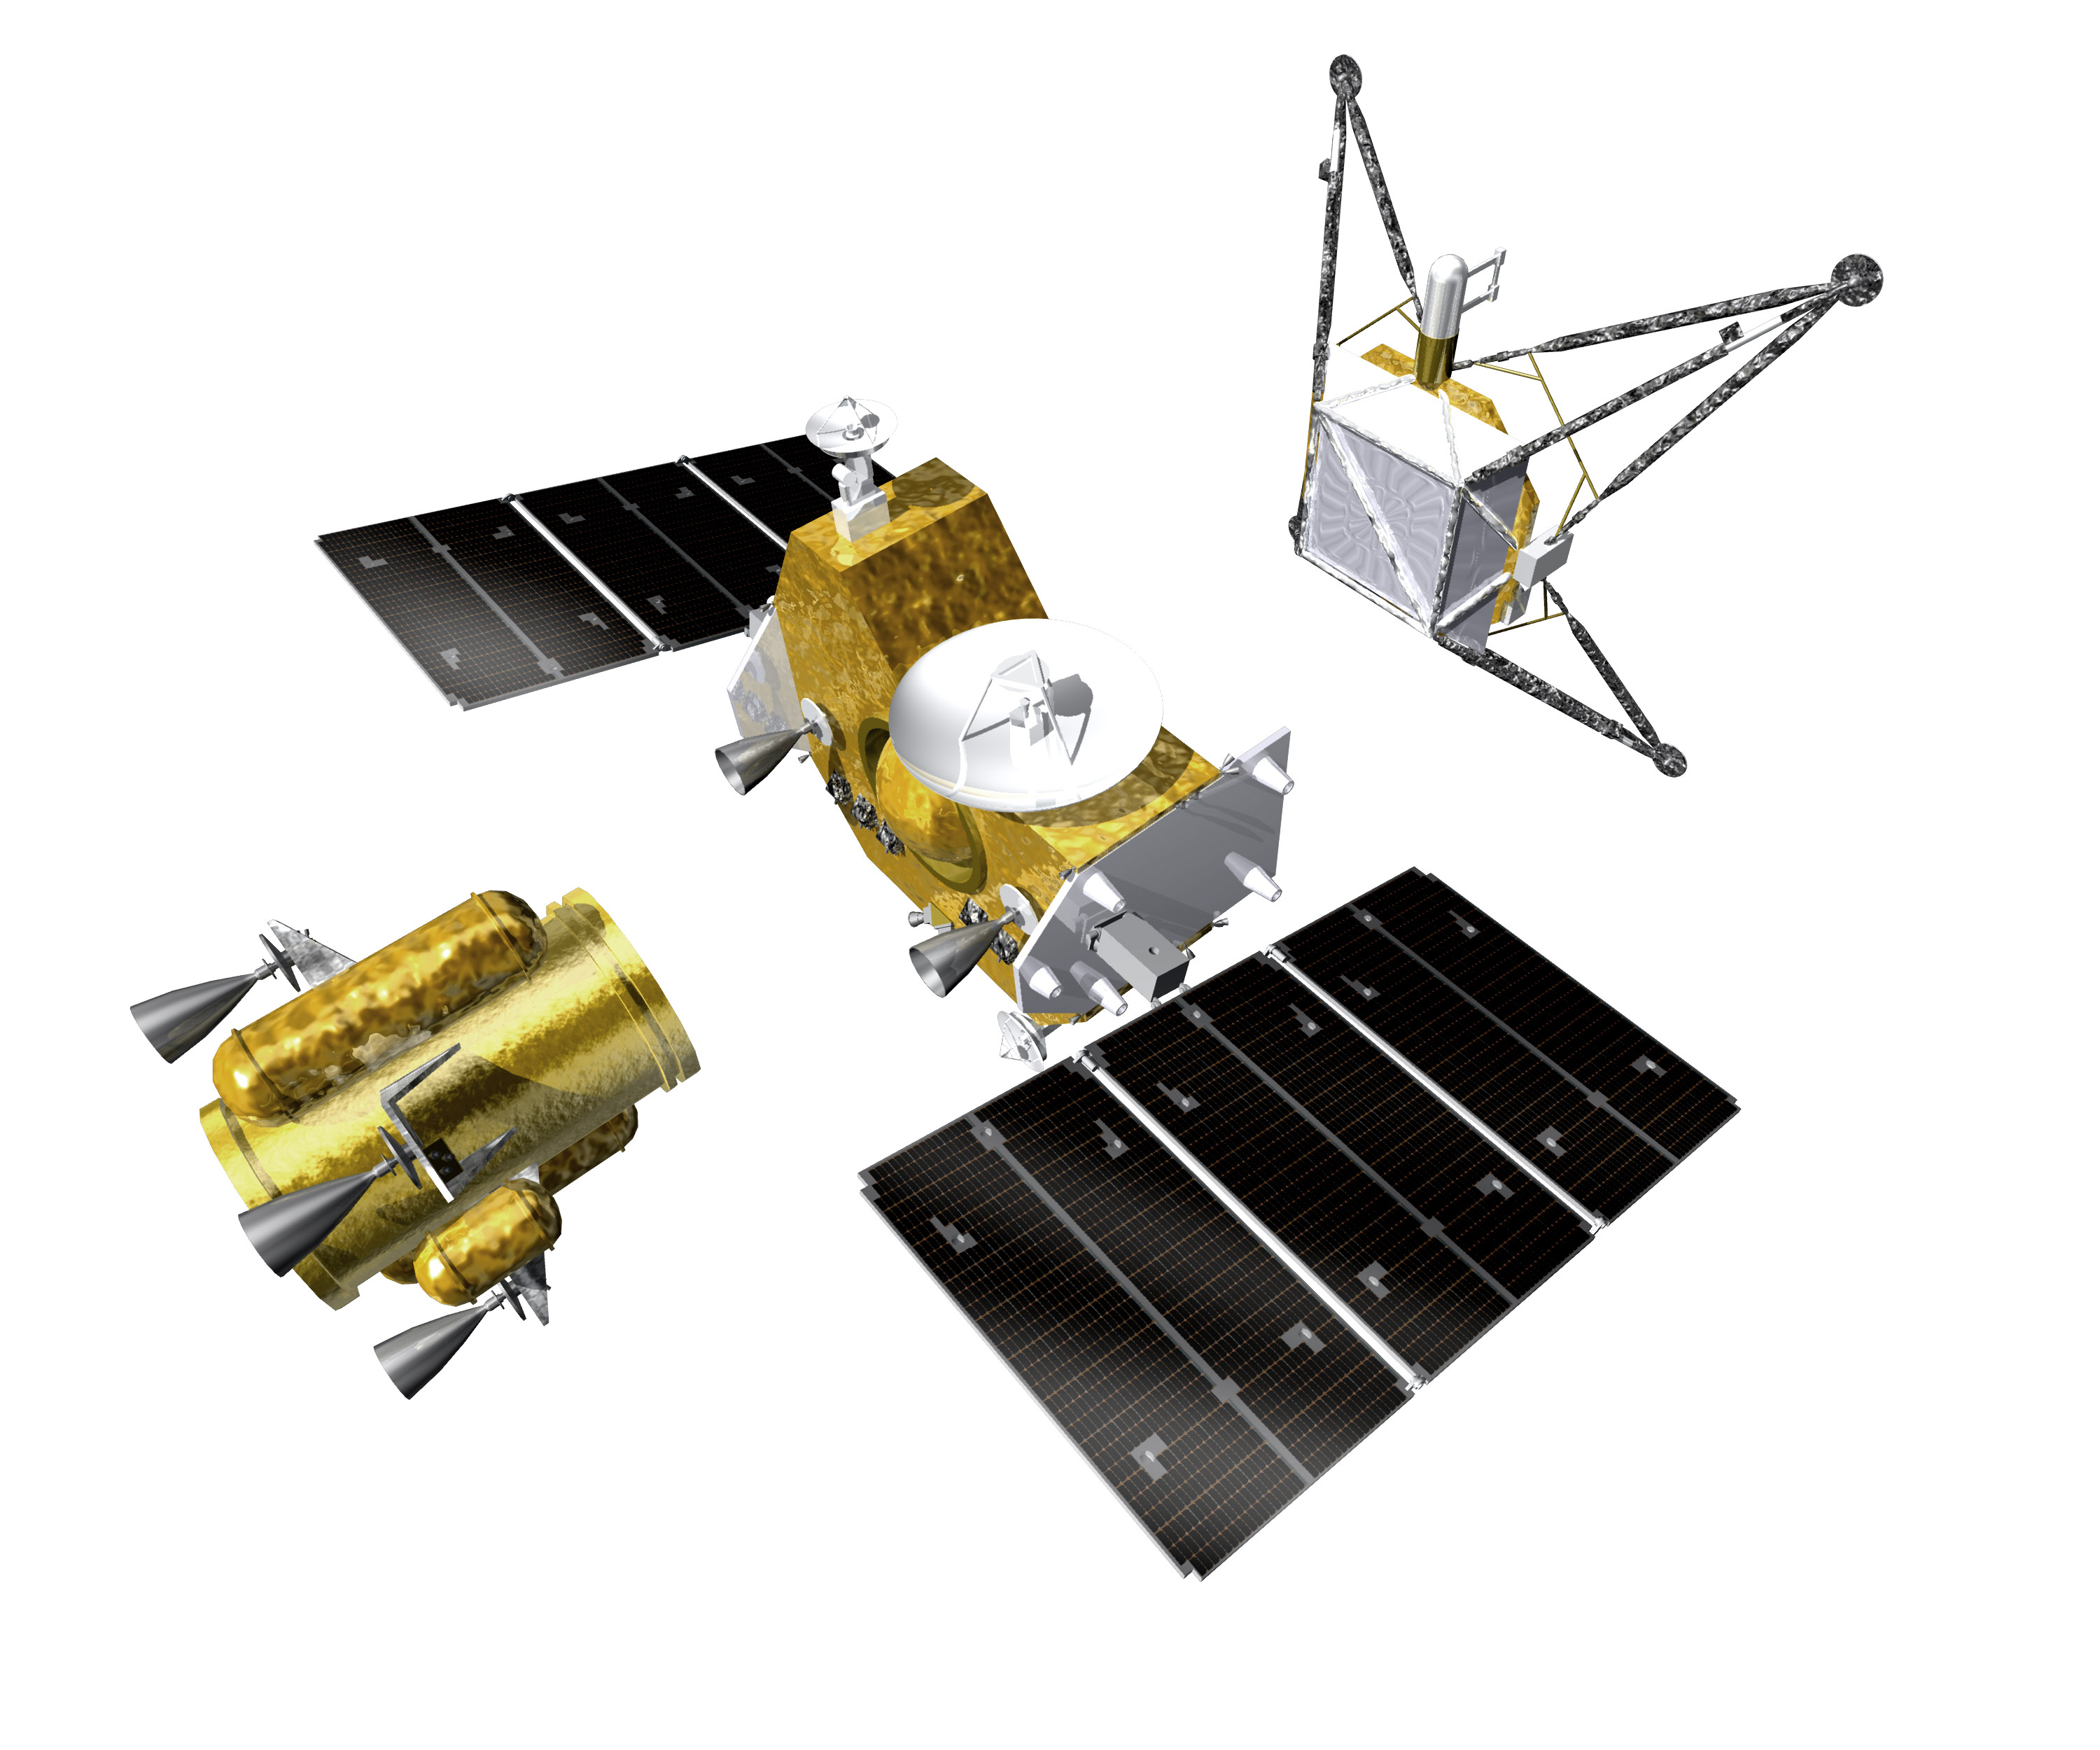 The three spacecraft modules